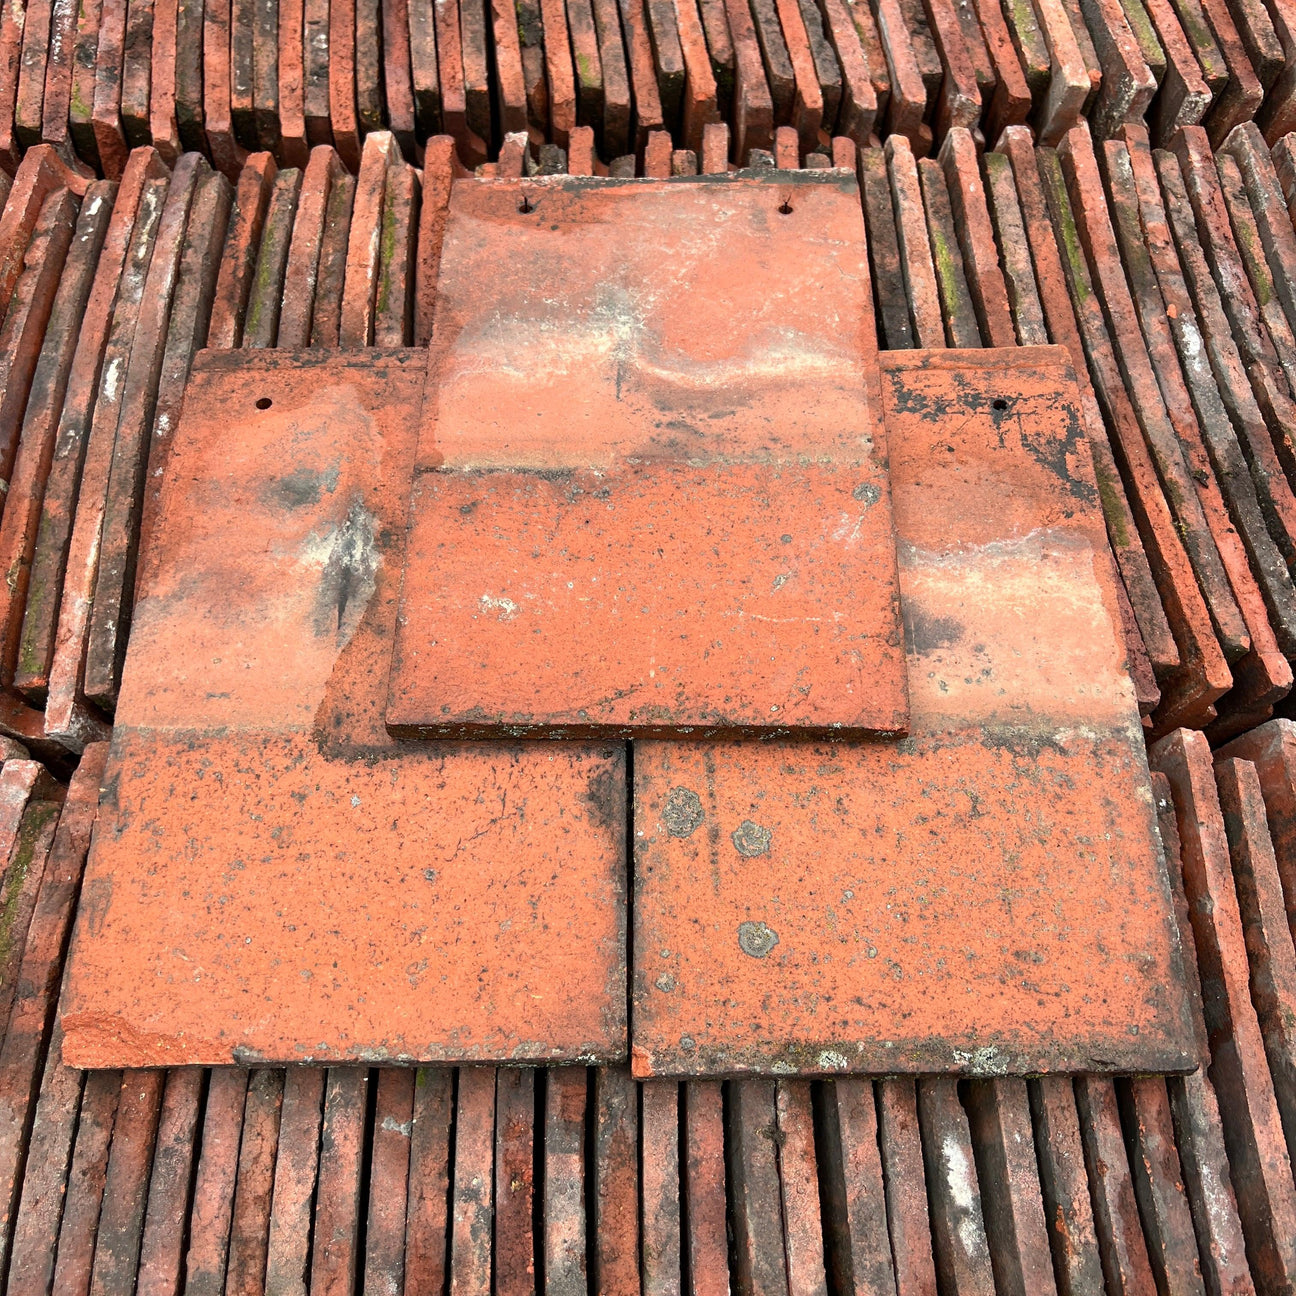 Reclaimed Tiles - Reclaimed Brick Company